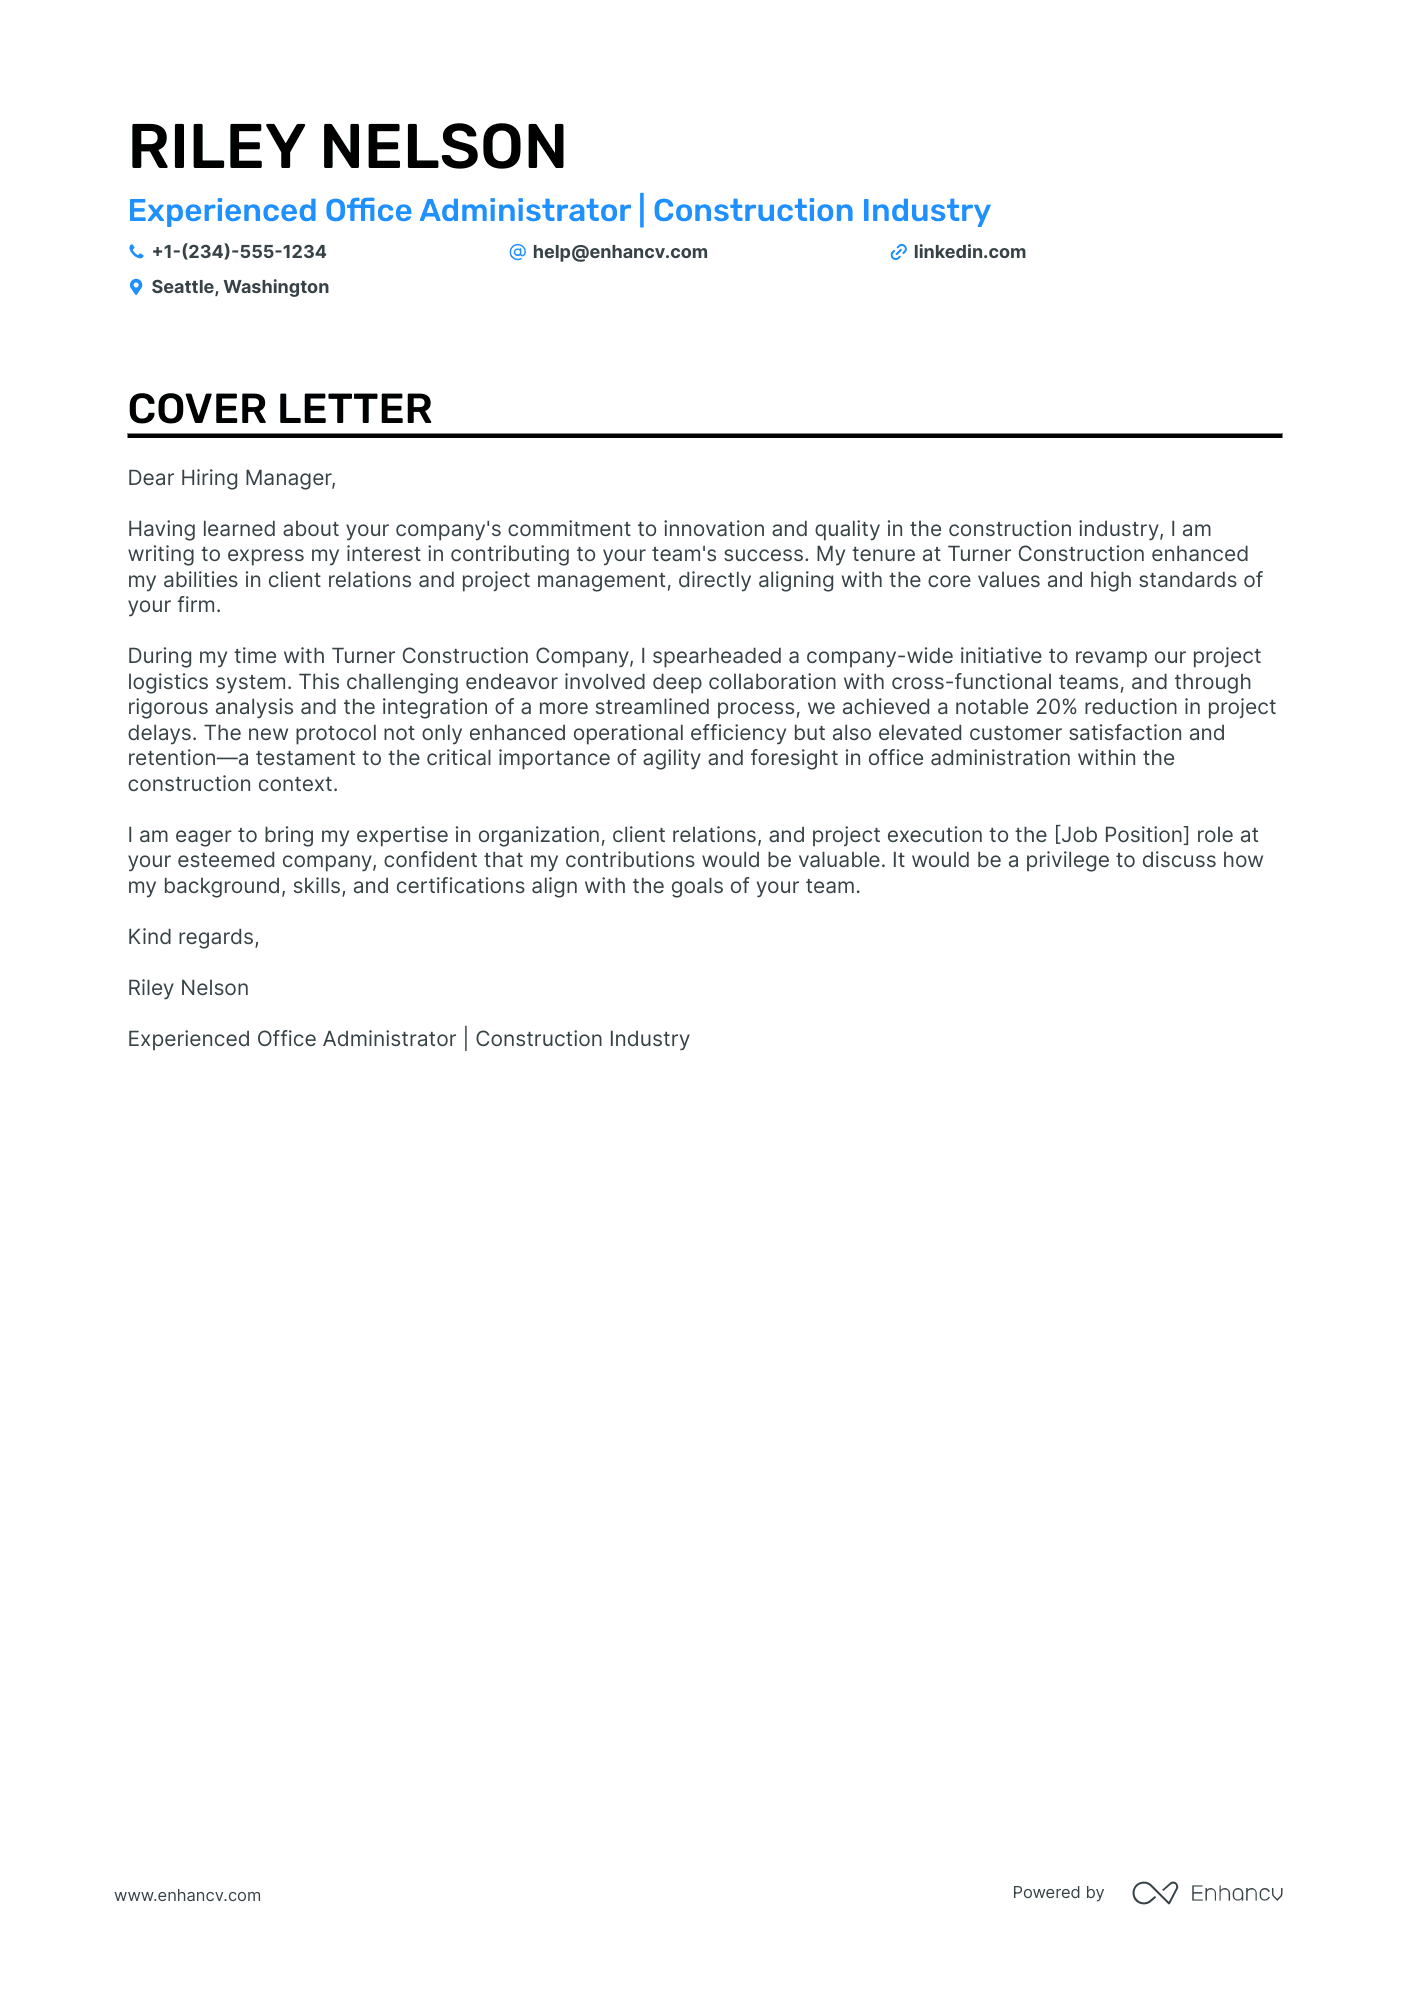 application letter sample for office administration